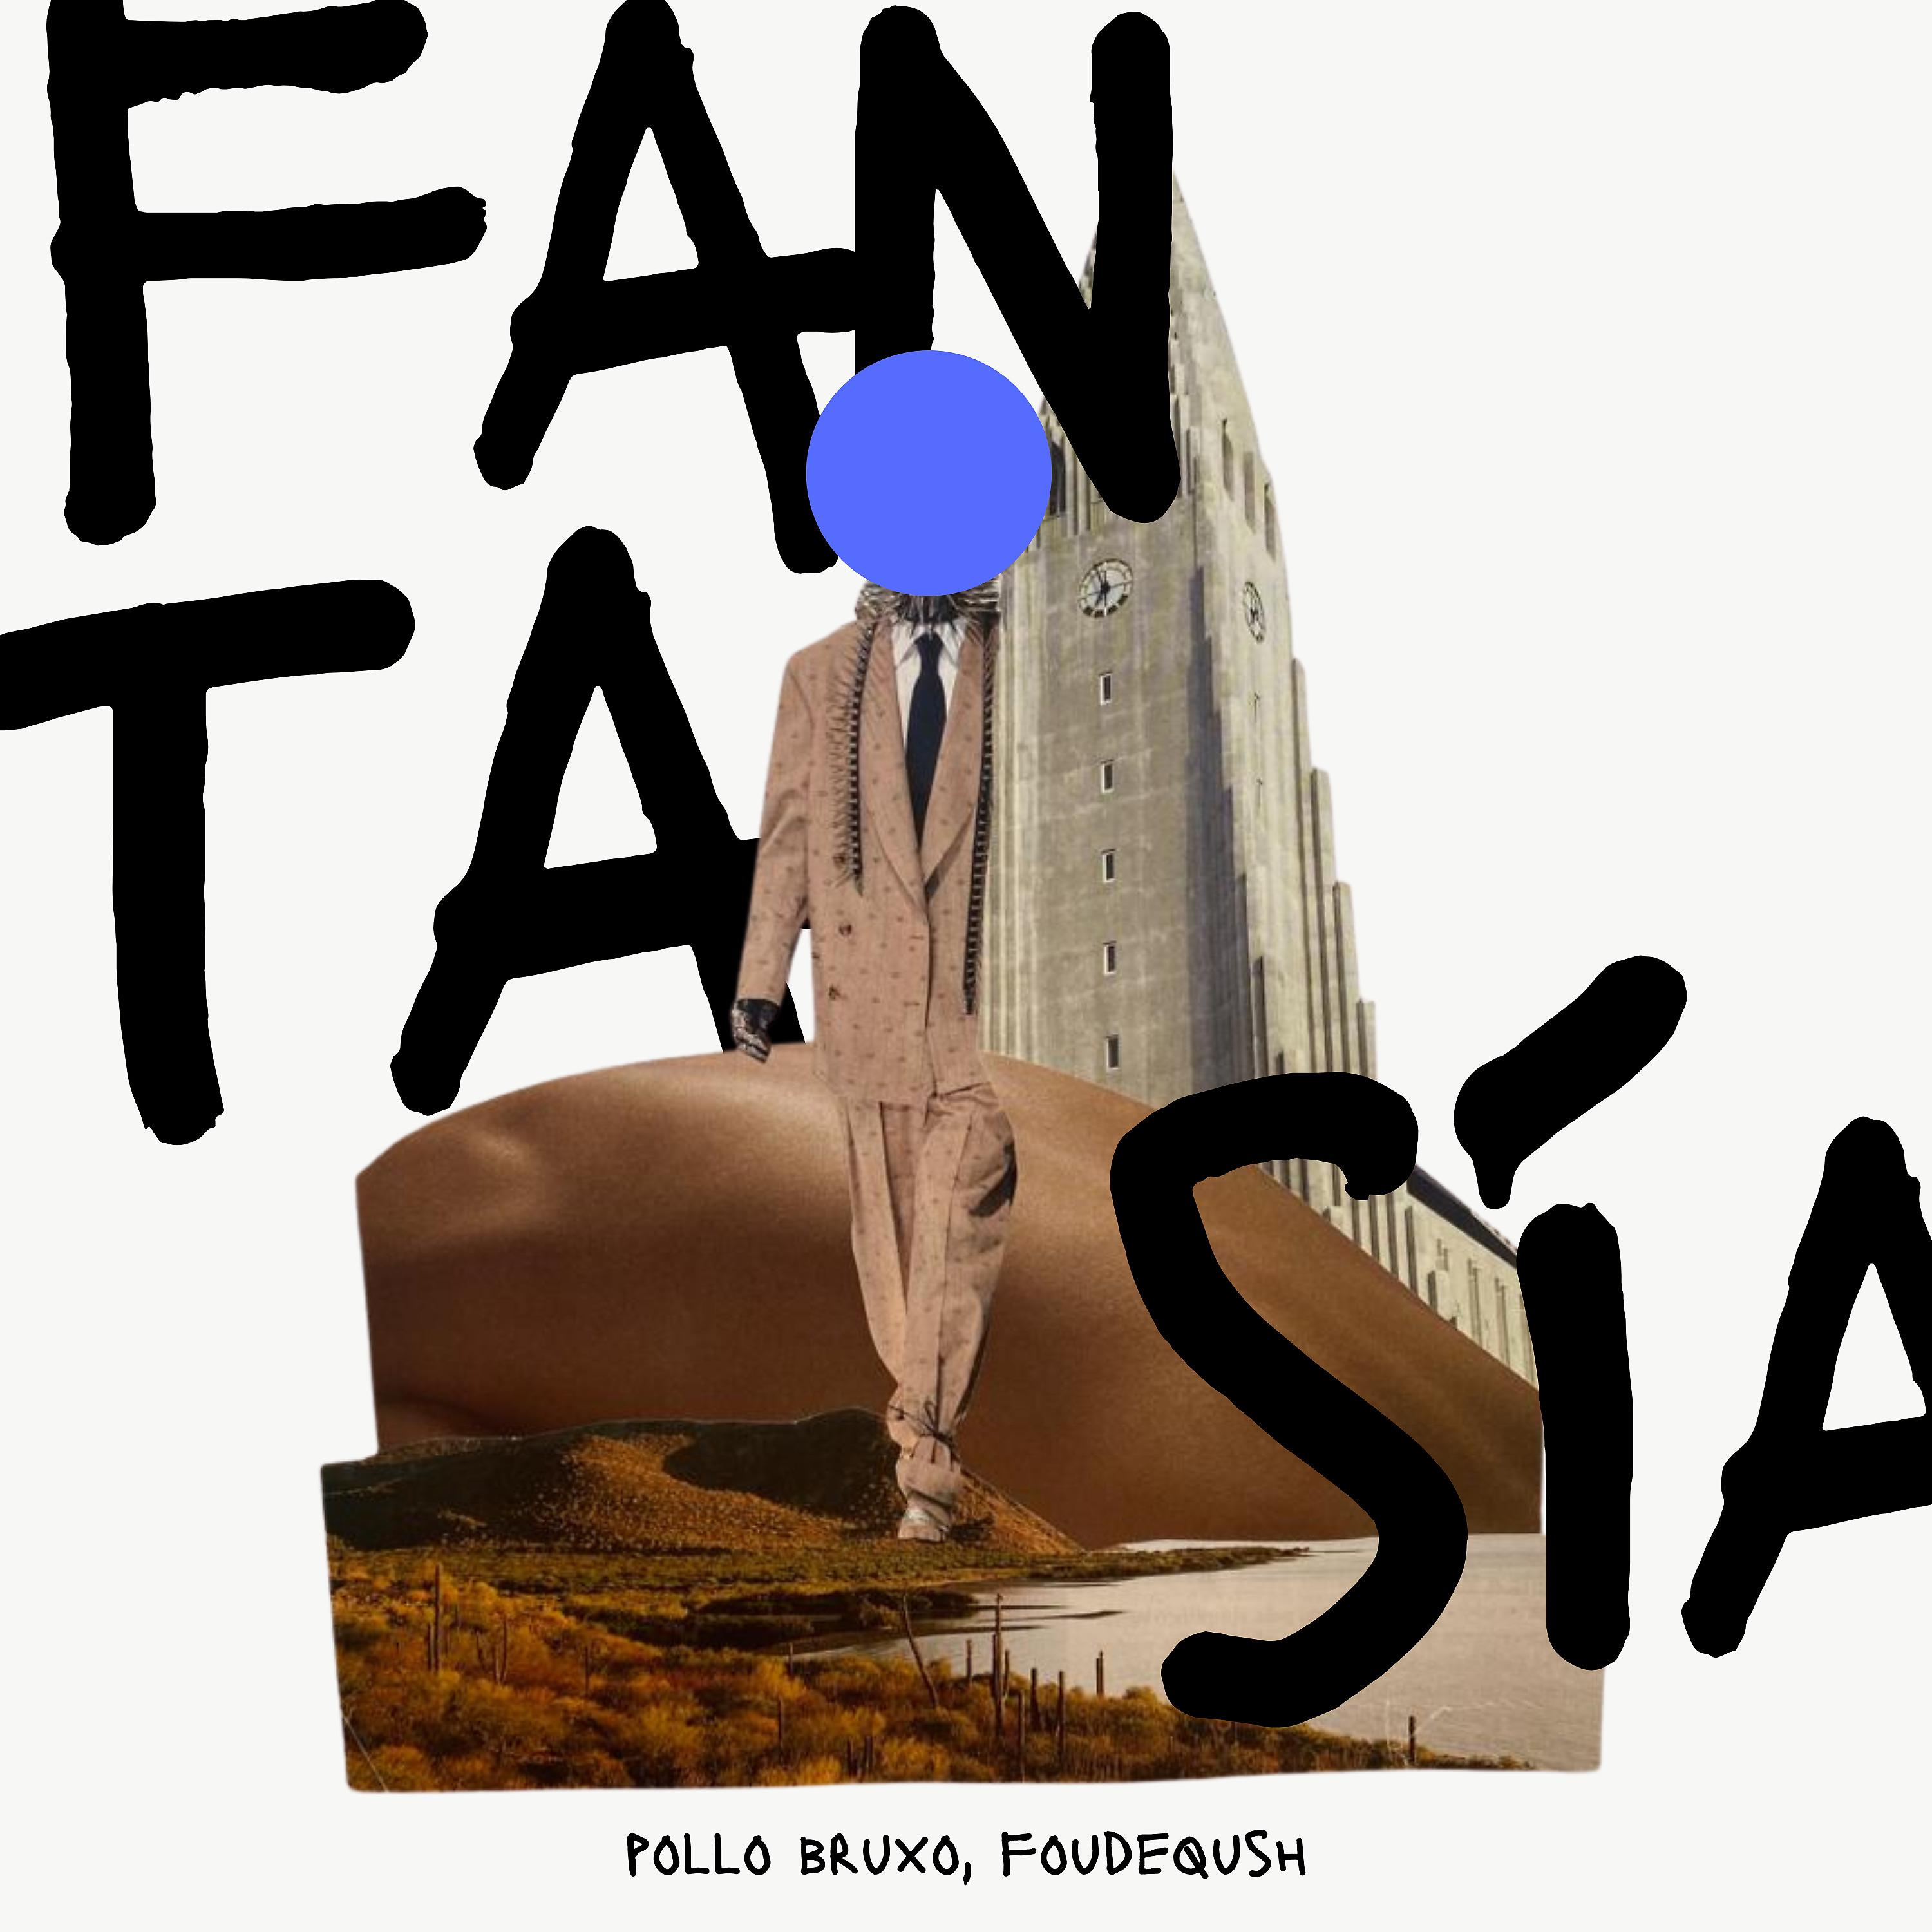 Постер альбома Fantasía